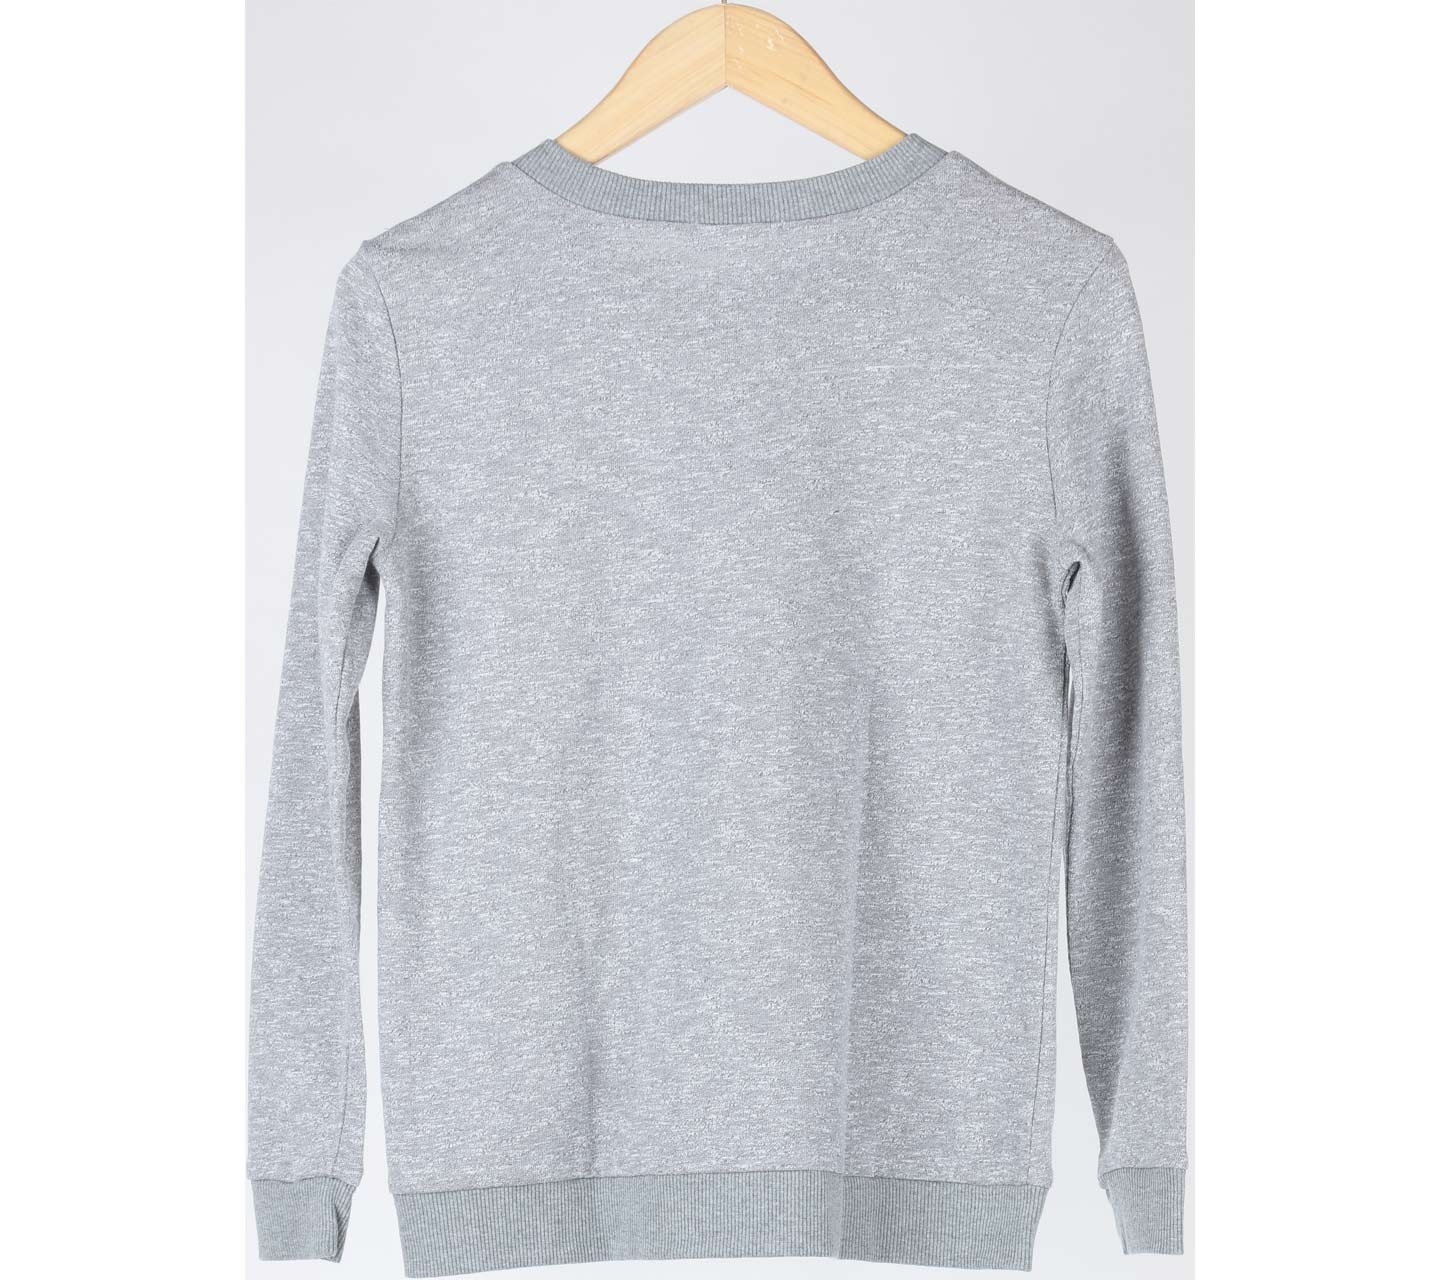 FvBasics Grey Sweater